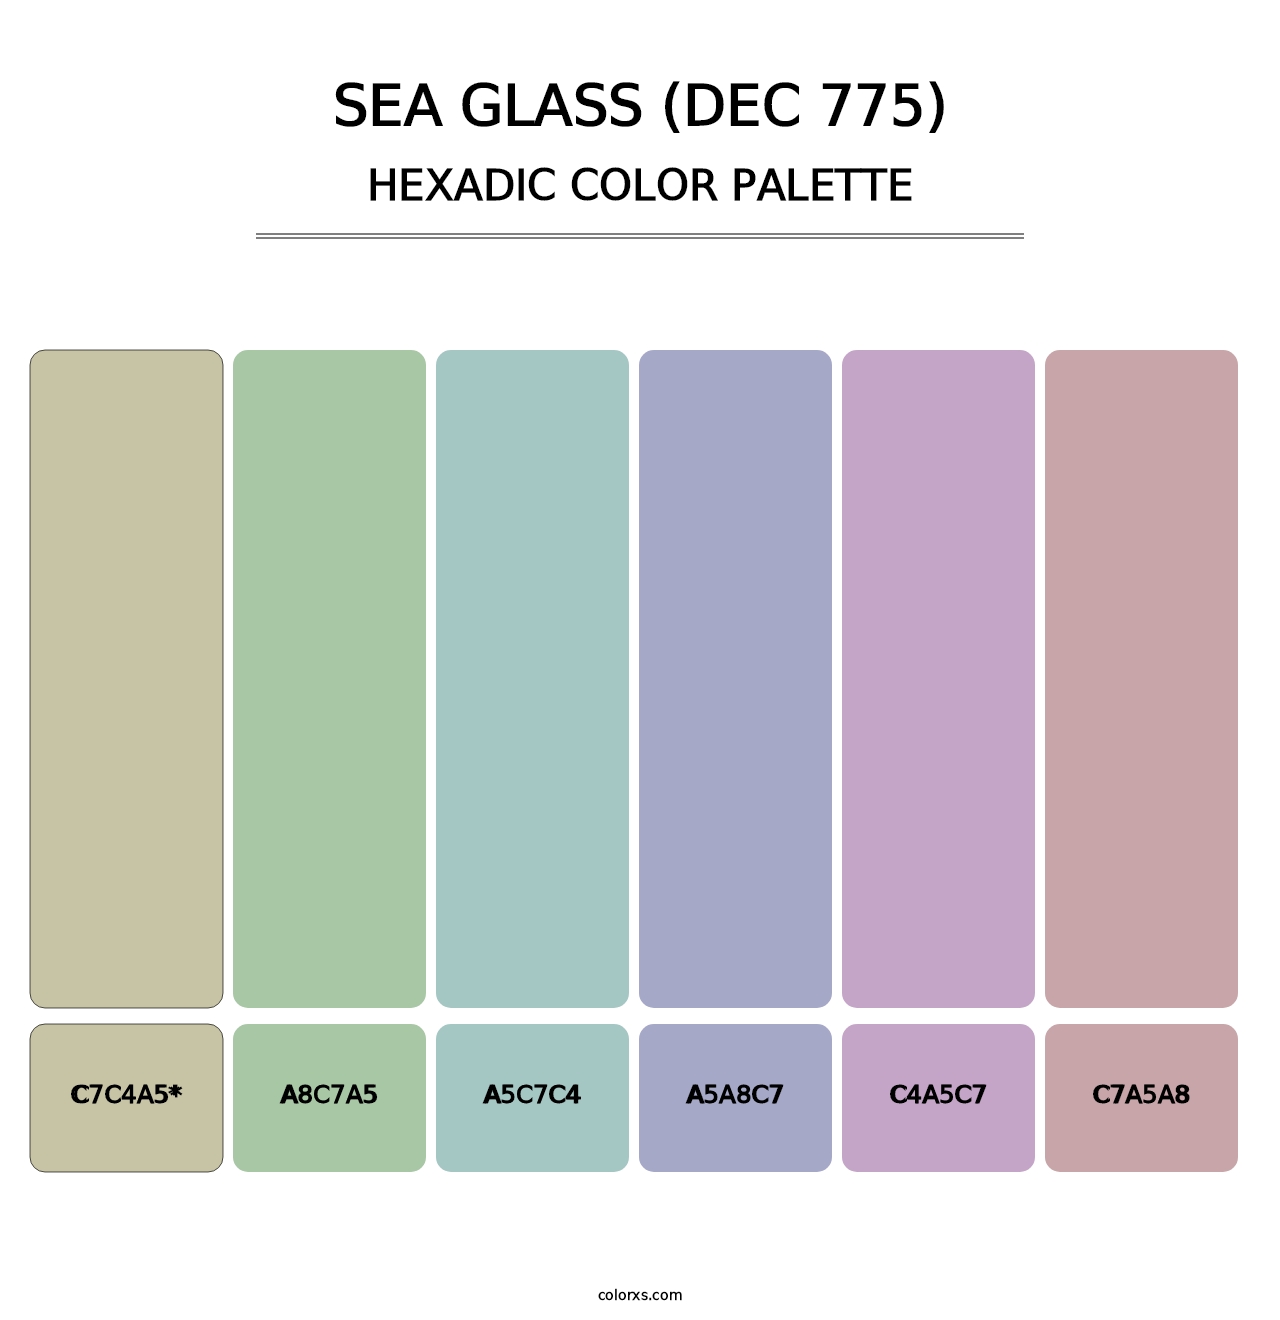 Sea Glass (DEC 775) - Hexadic Color Palette